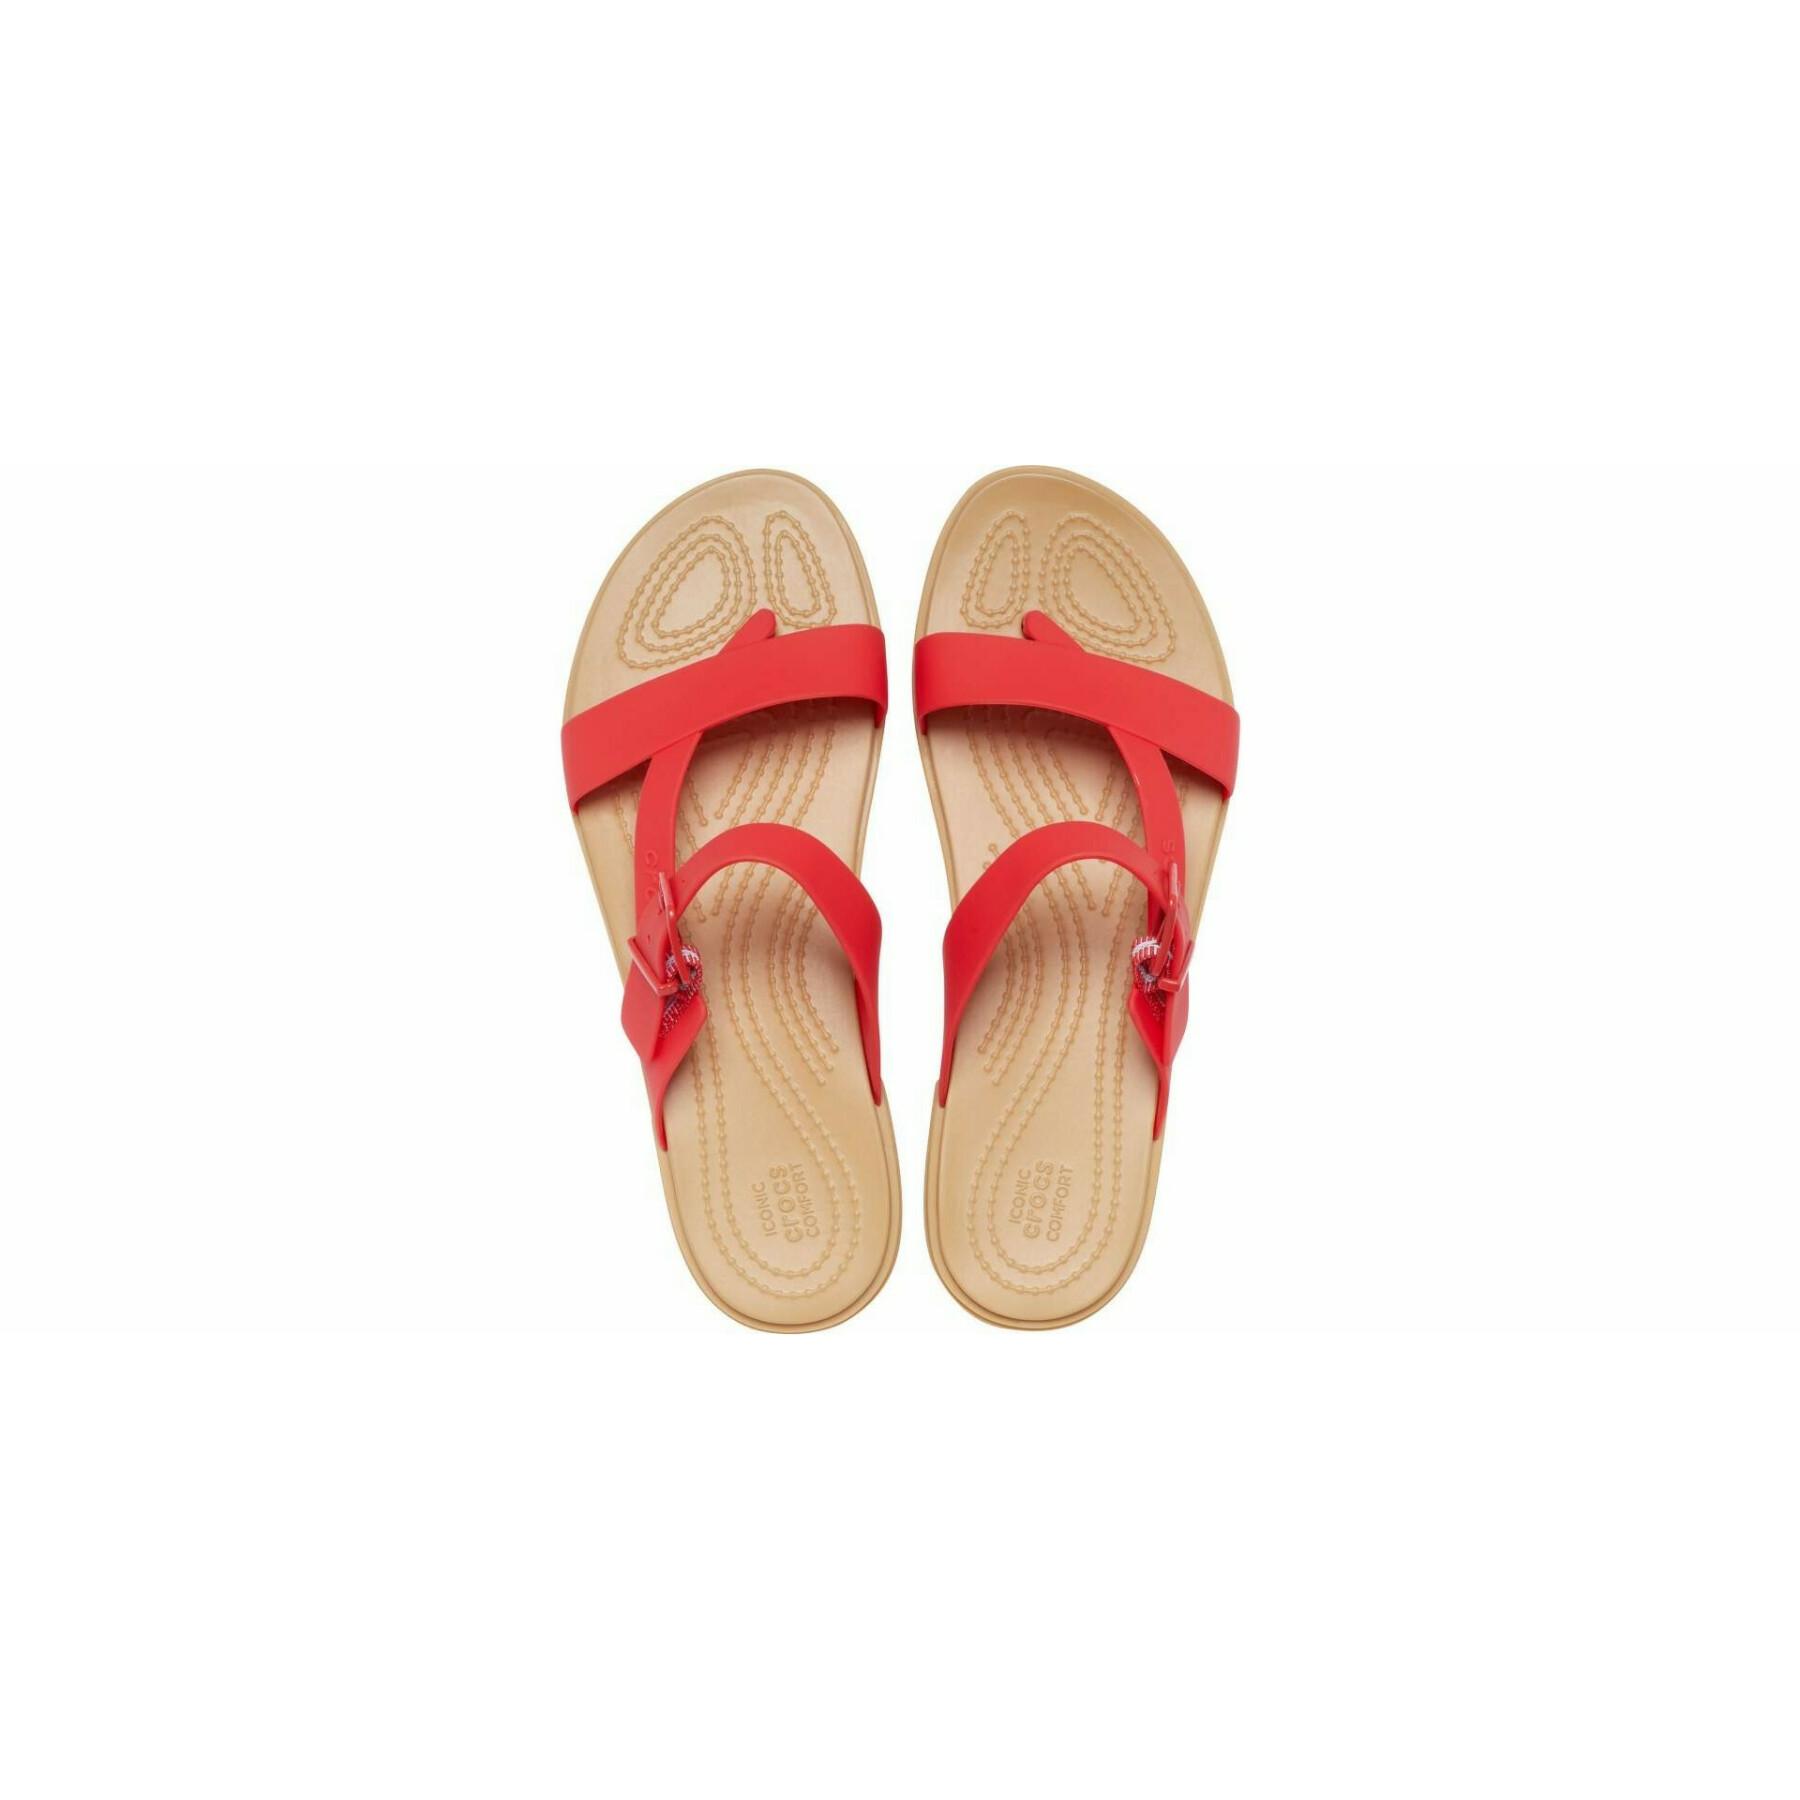 Women's sandals Crocs tulum toe post